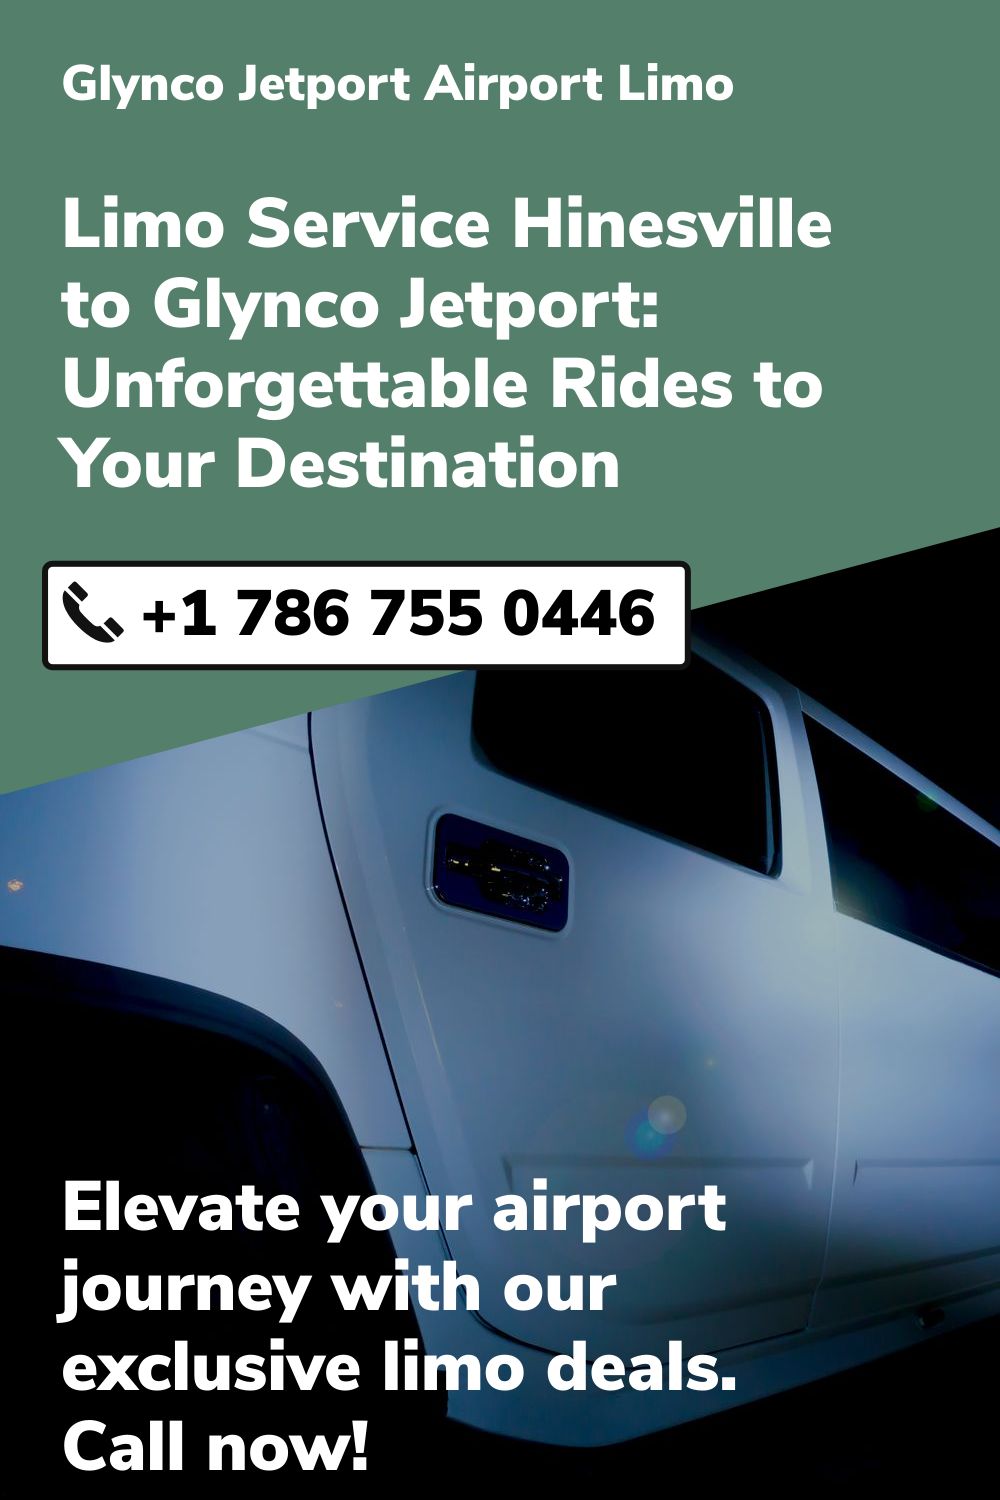 Glynco Jetport Airport Limo